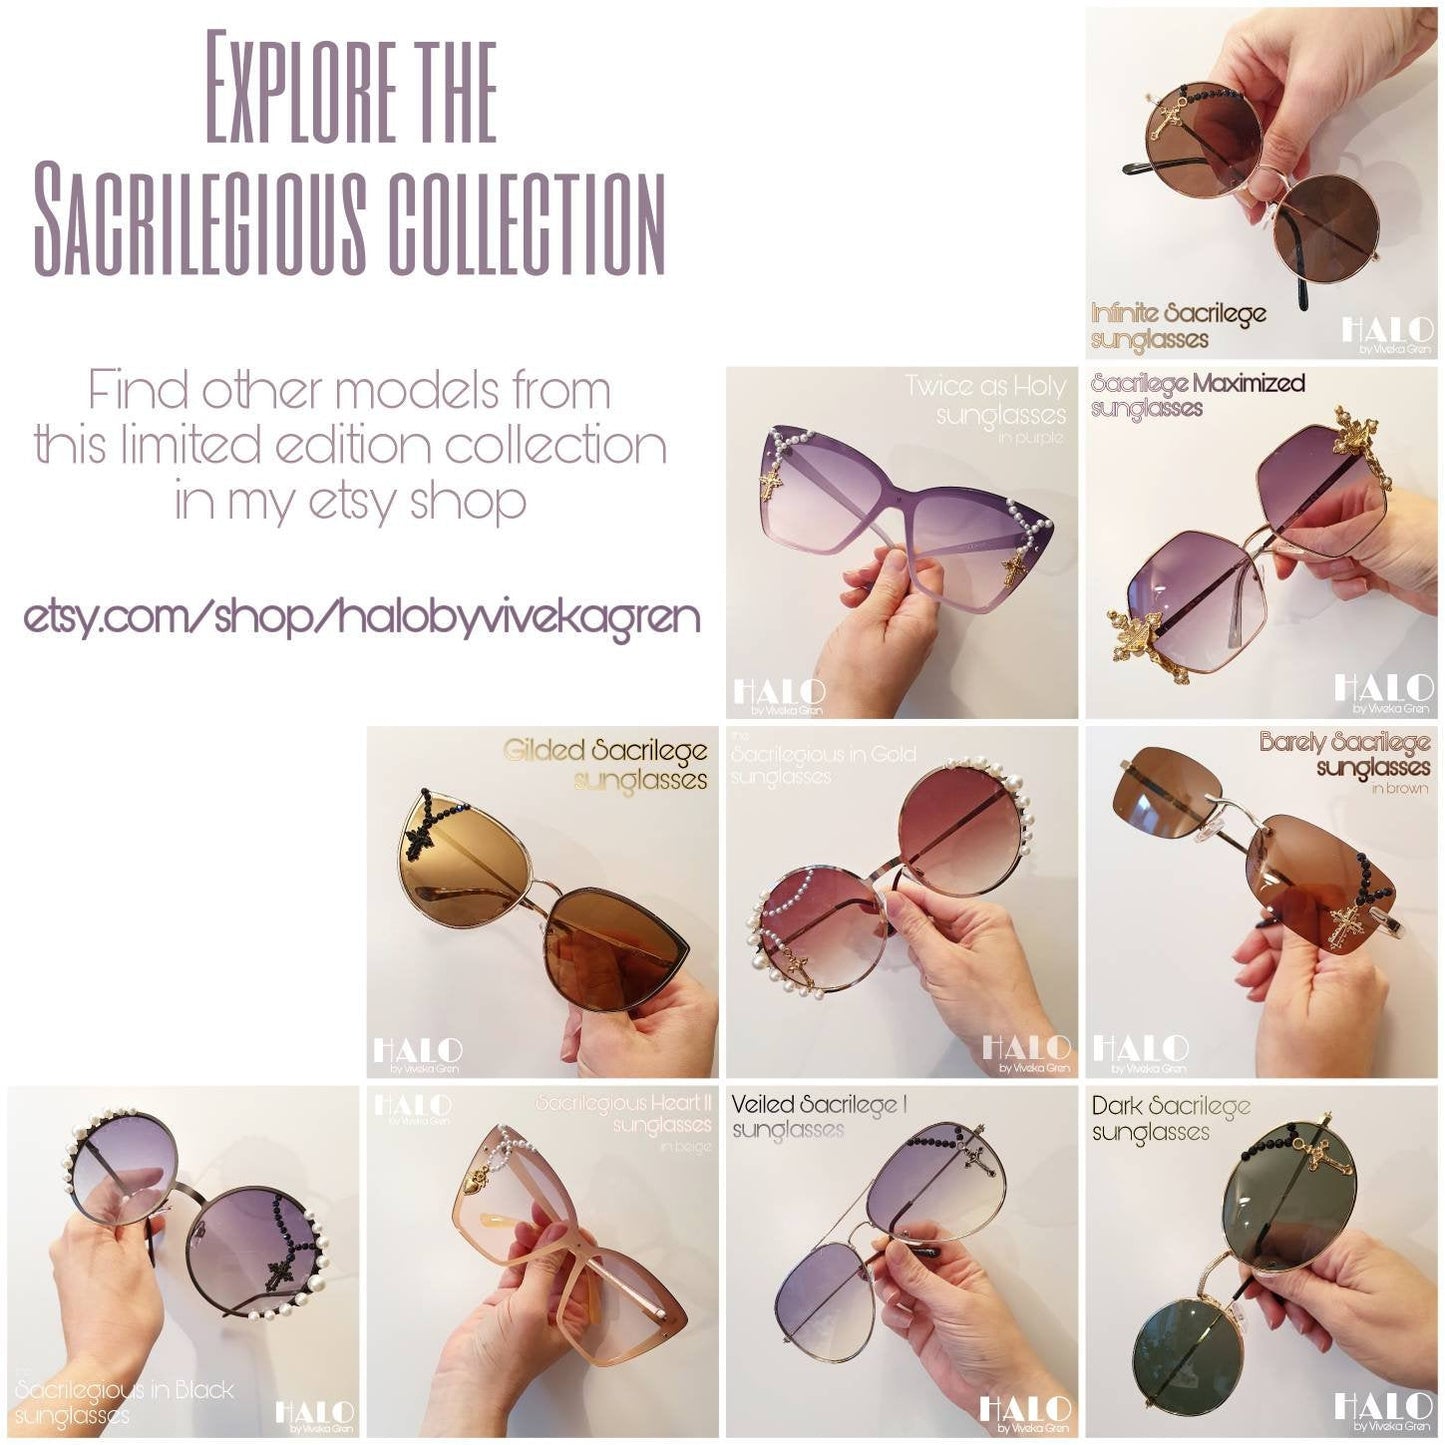 Sacrilegious Collection: The Dark Sacrilege sunglasses, oval unisex frames